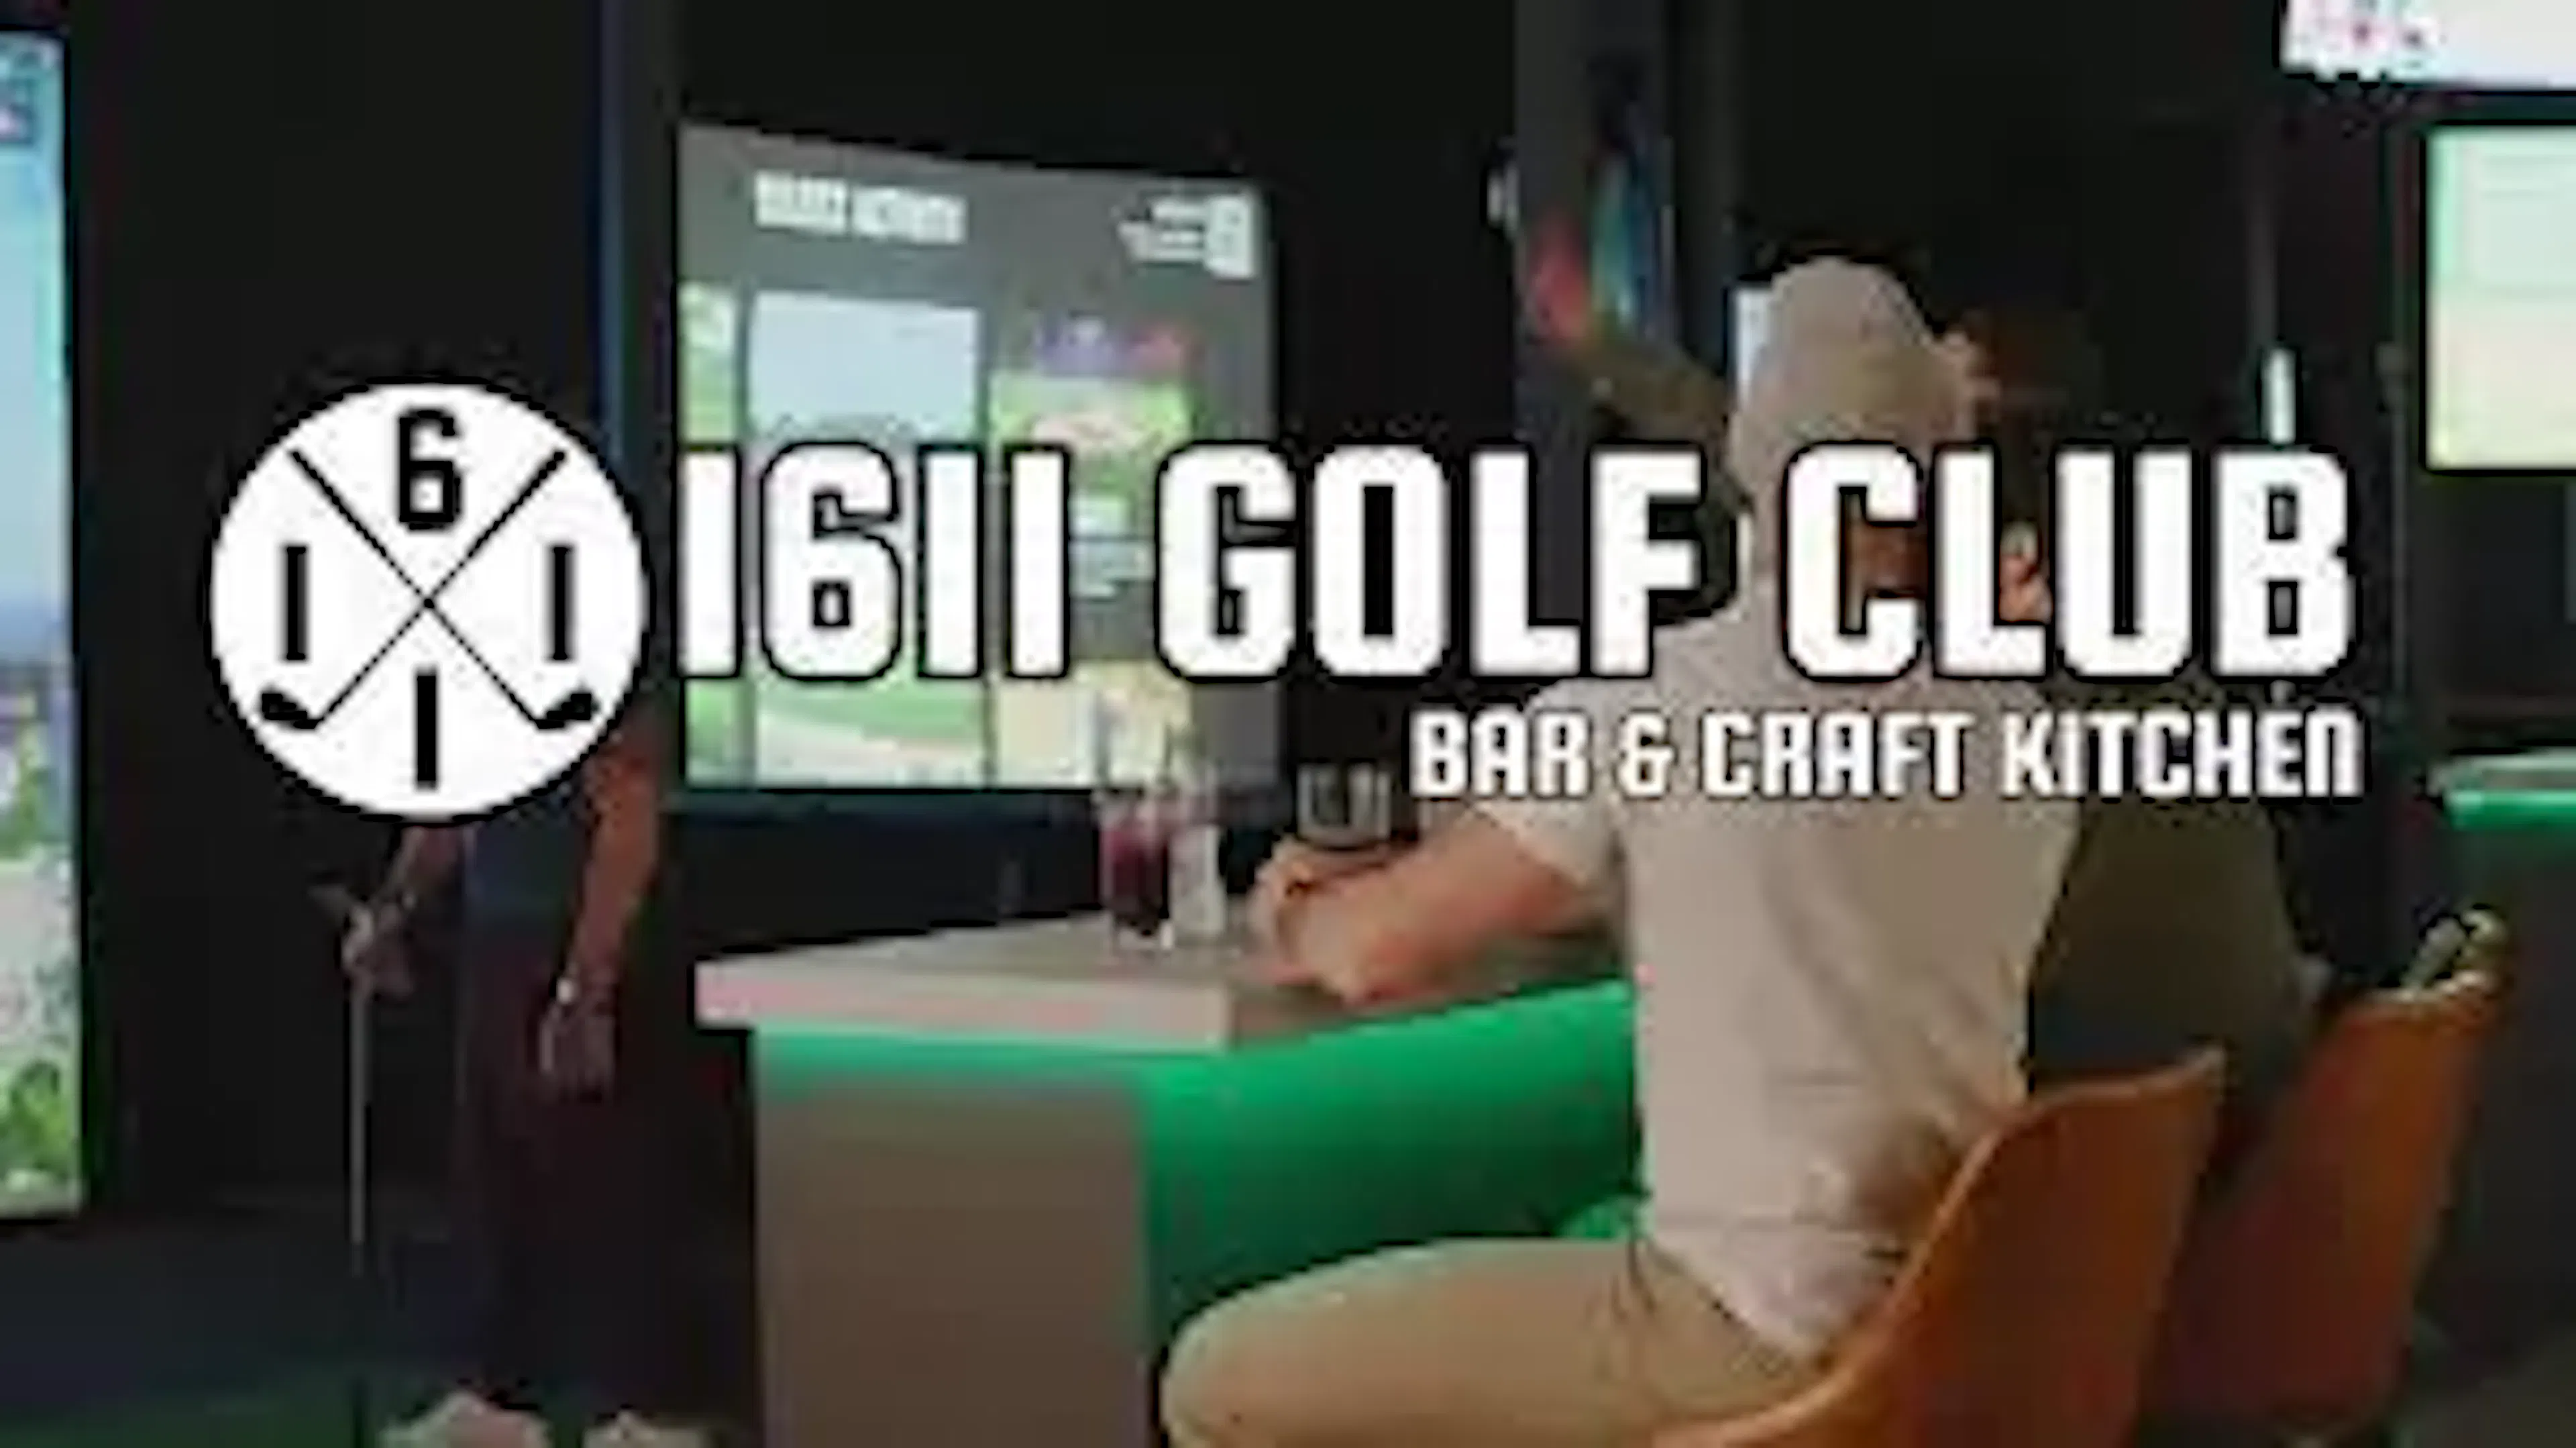 1611 indoor golf club